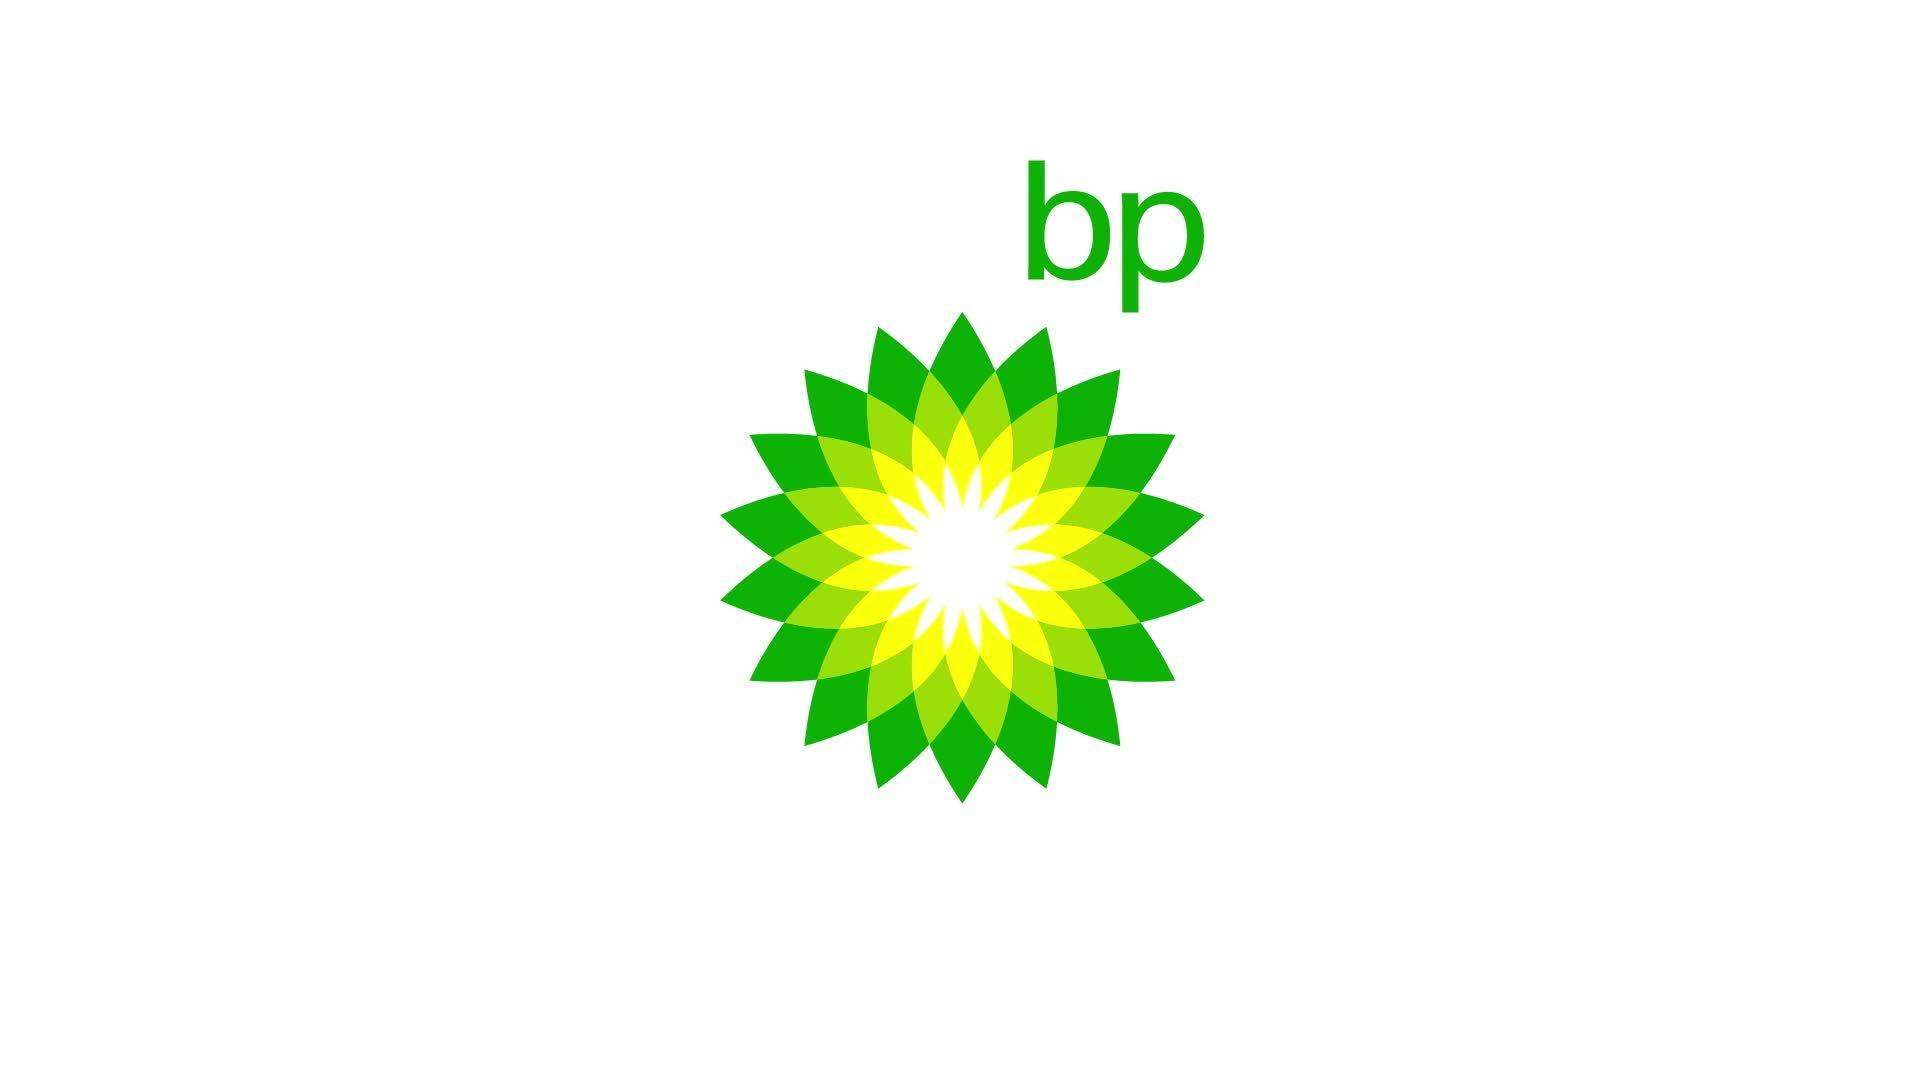 BP Green Logo - Trading